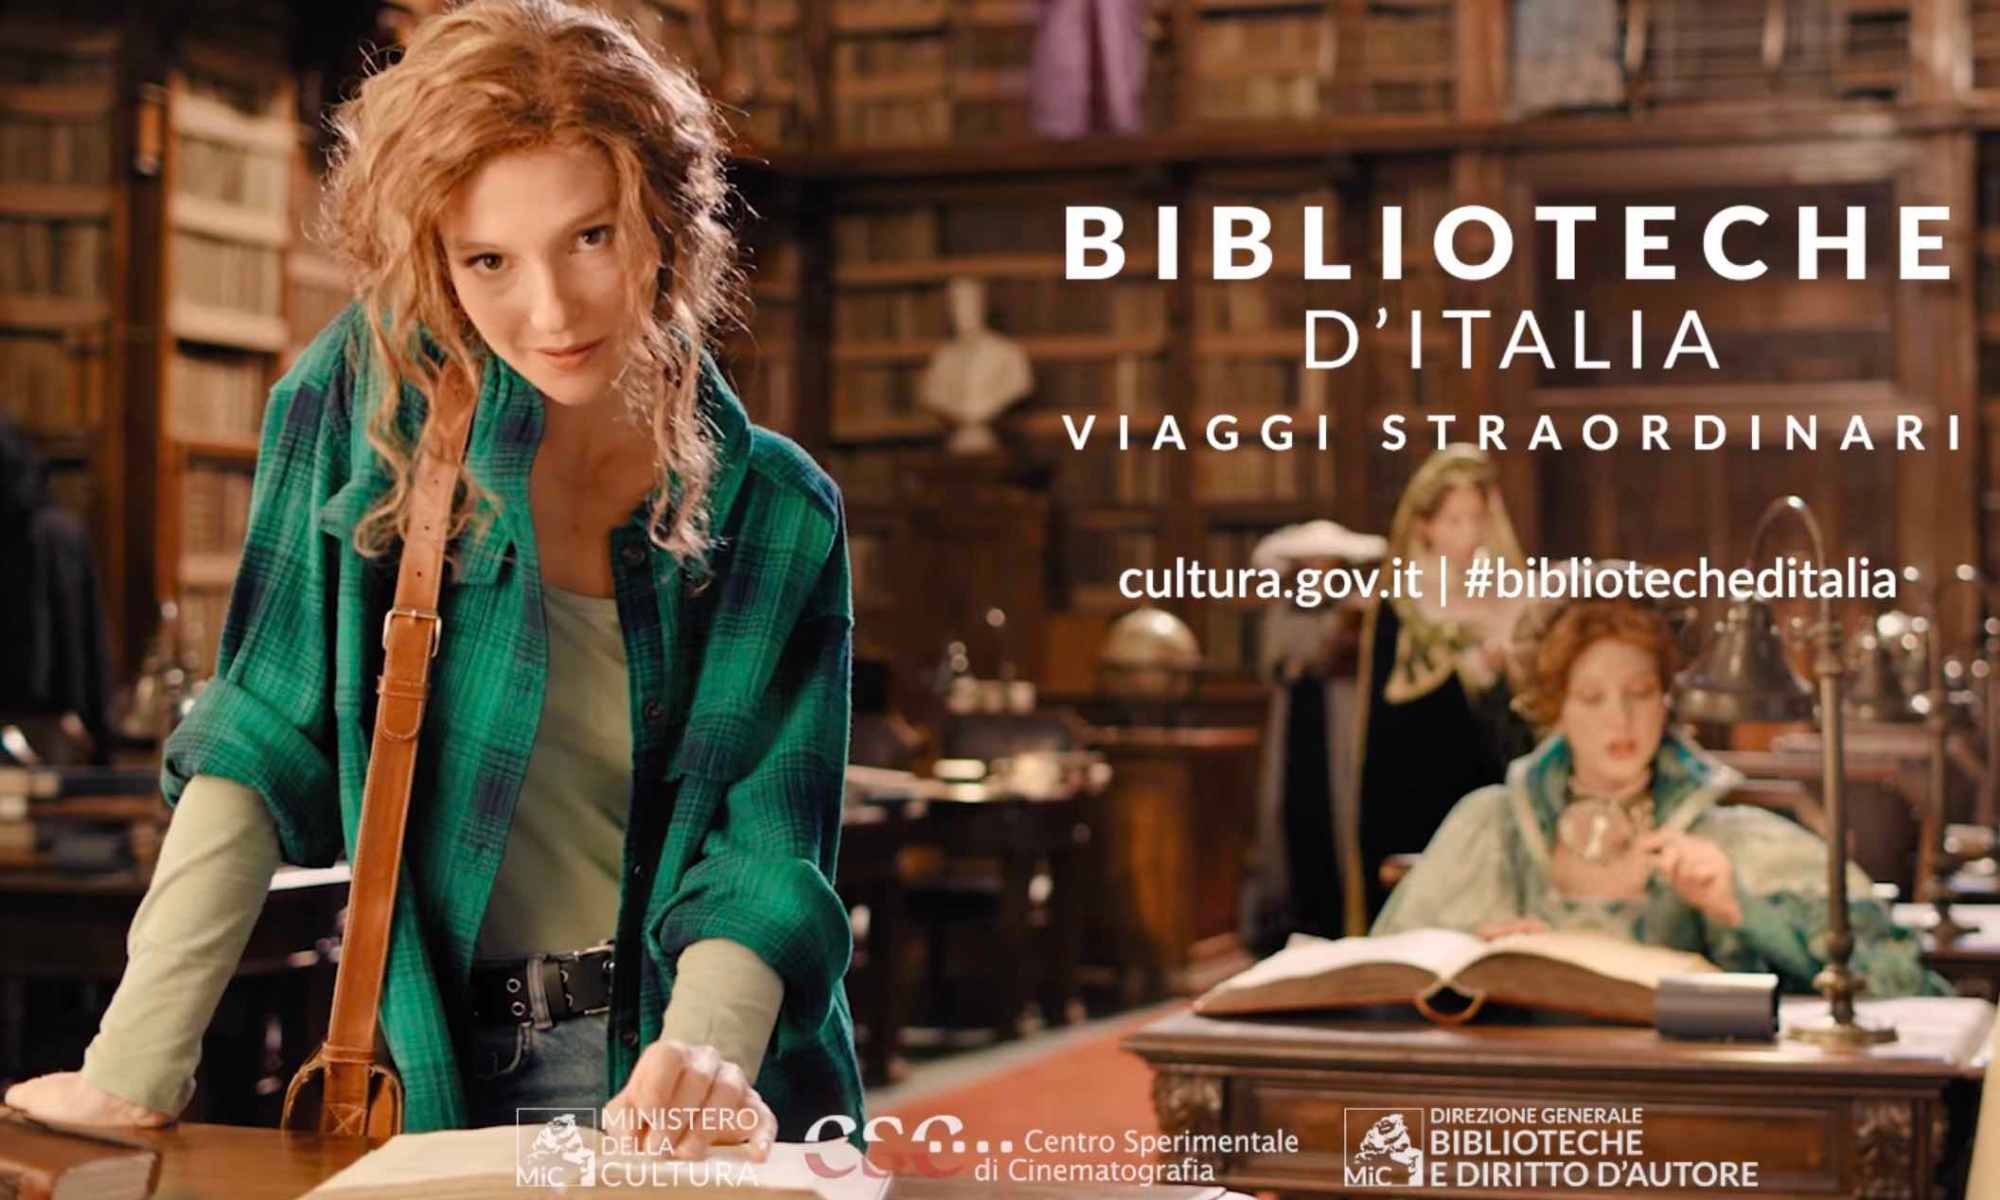 biblioteche-italia-viaggi-straordinari-ragazze-girls-cultura